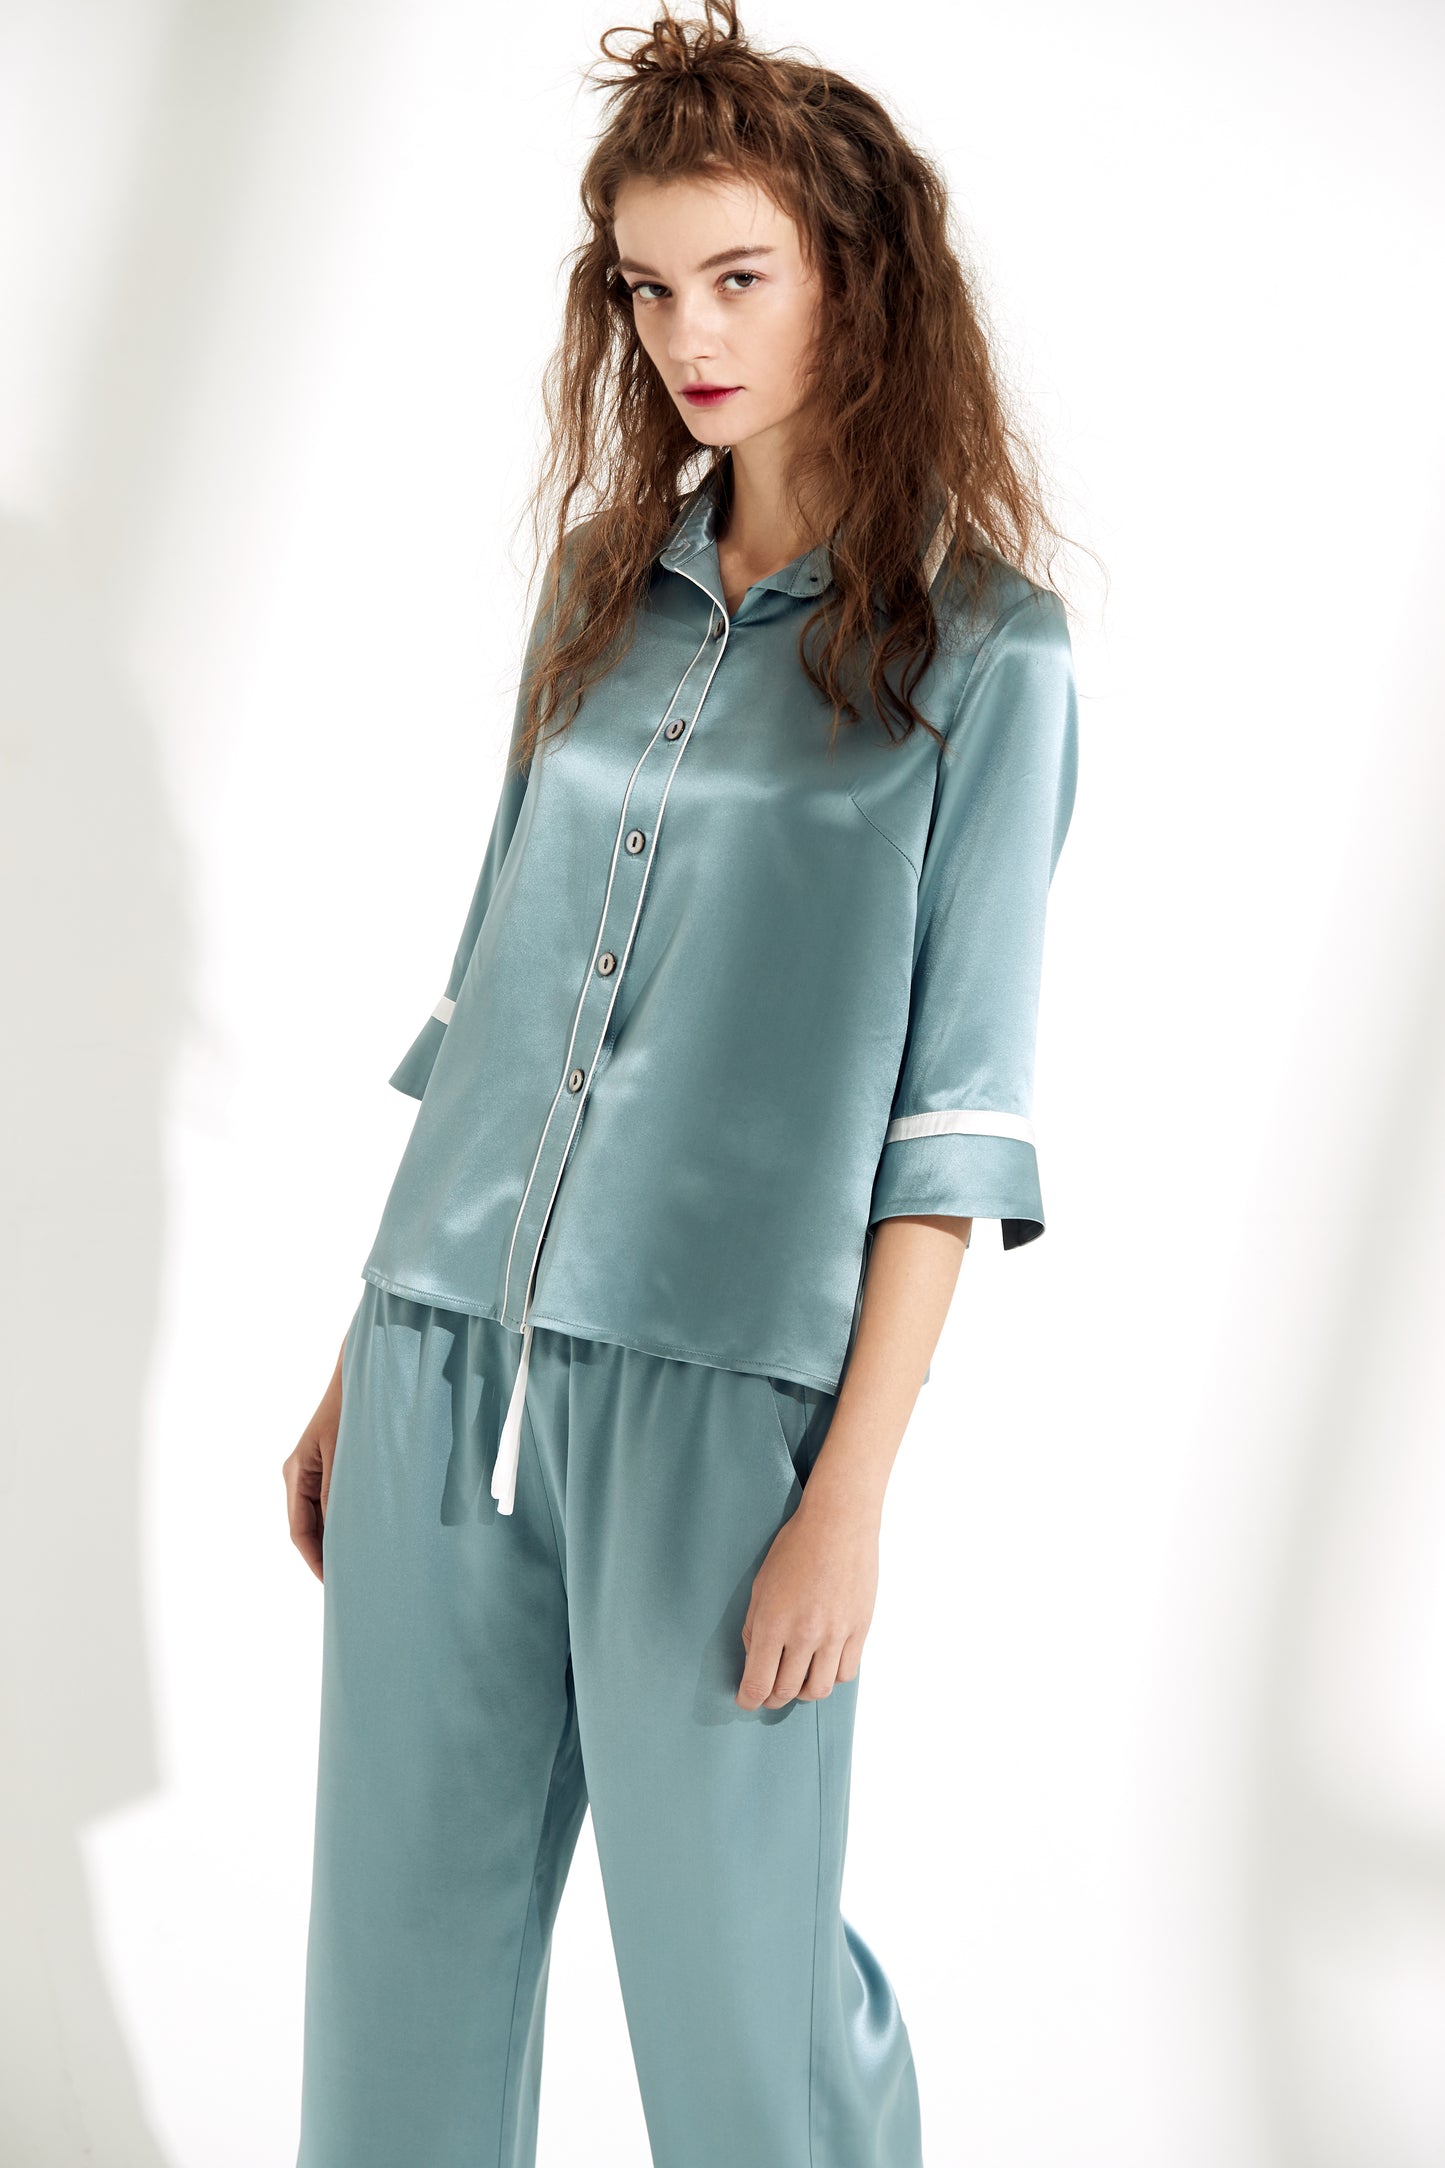 Women's silk pajamas set (three-quarter sleeve shirt and capri pants)